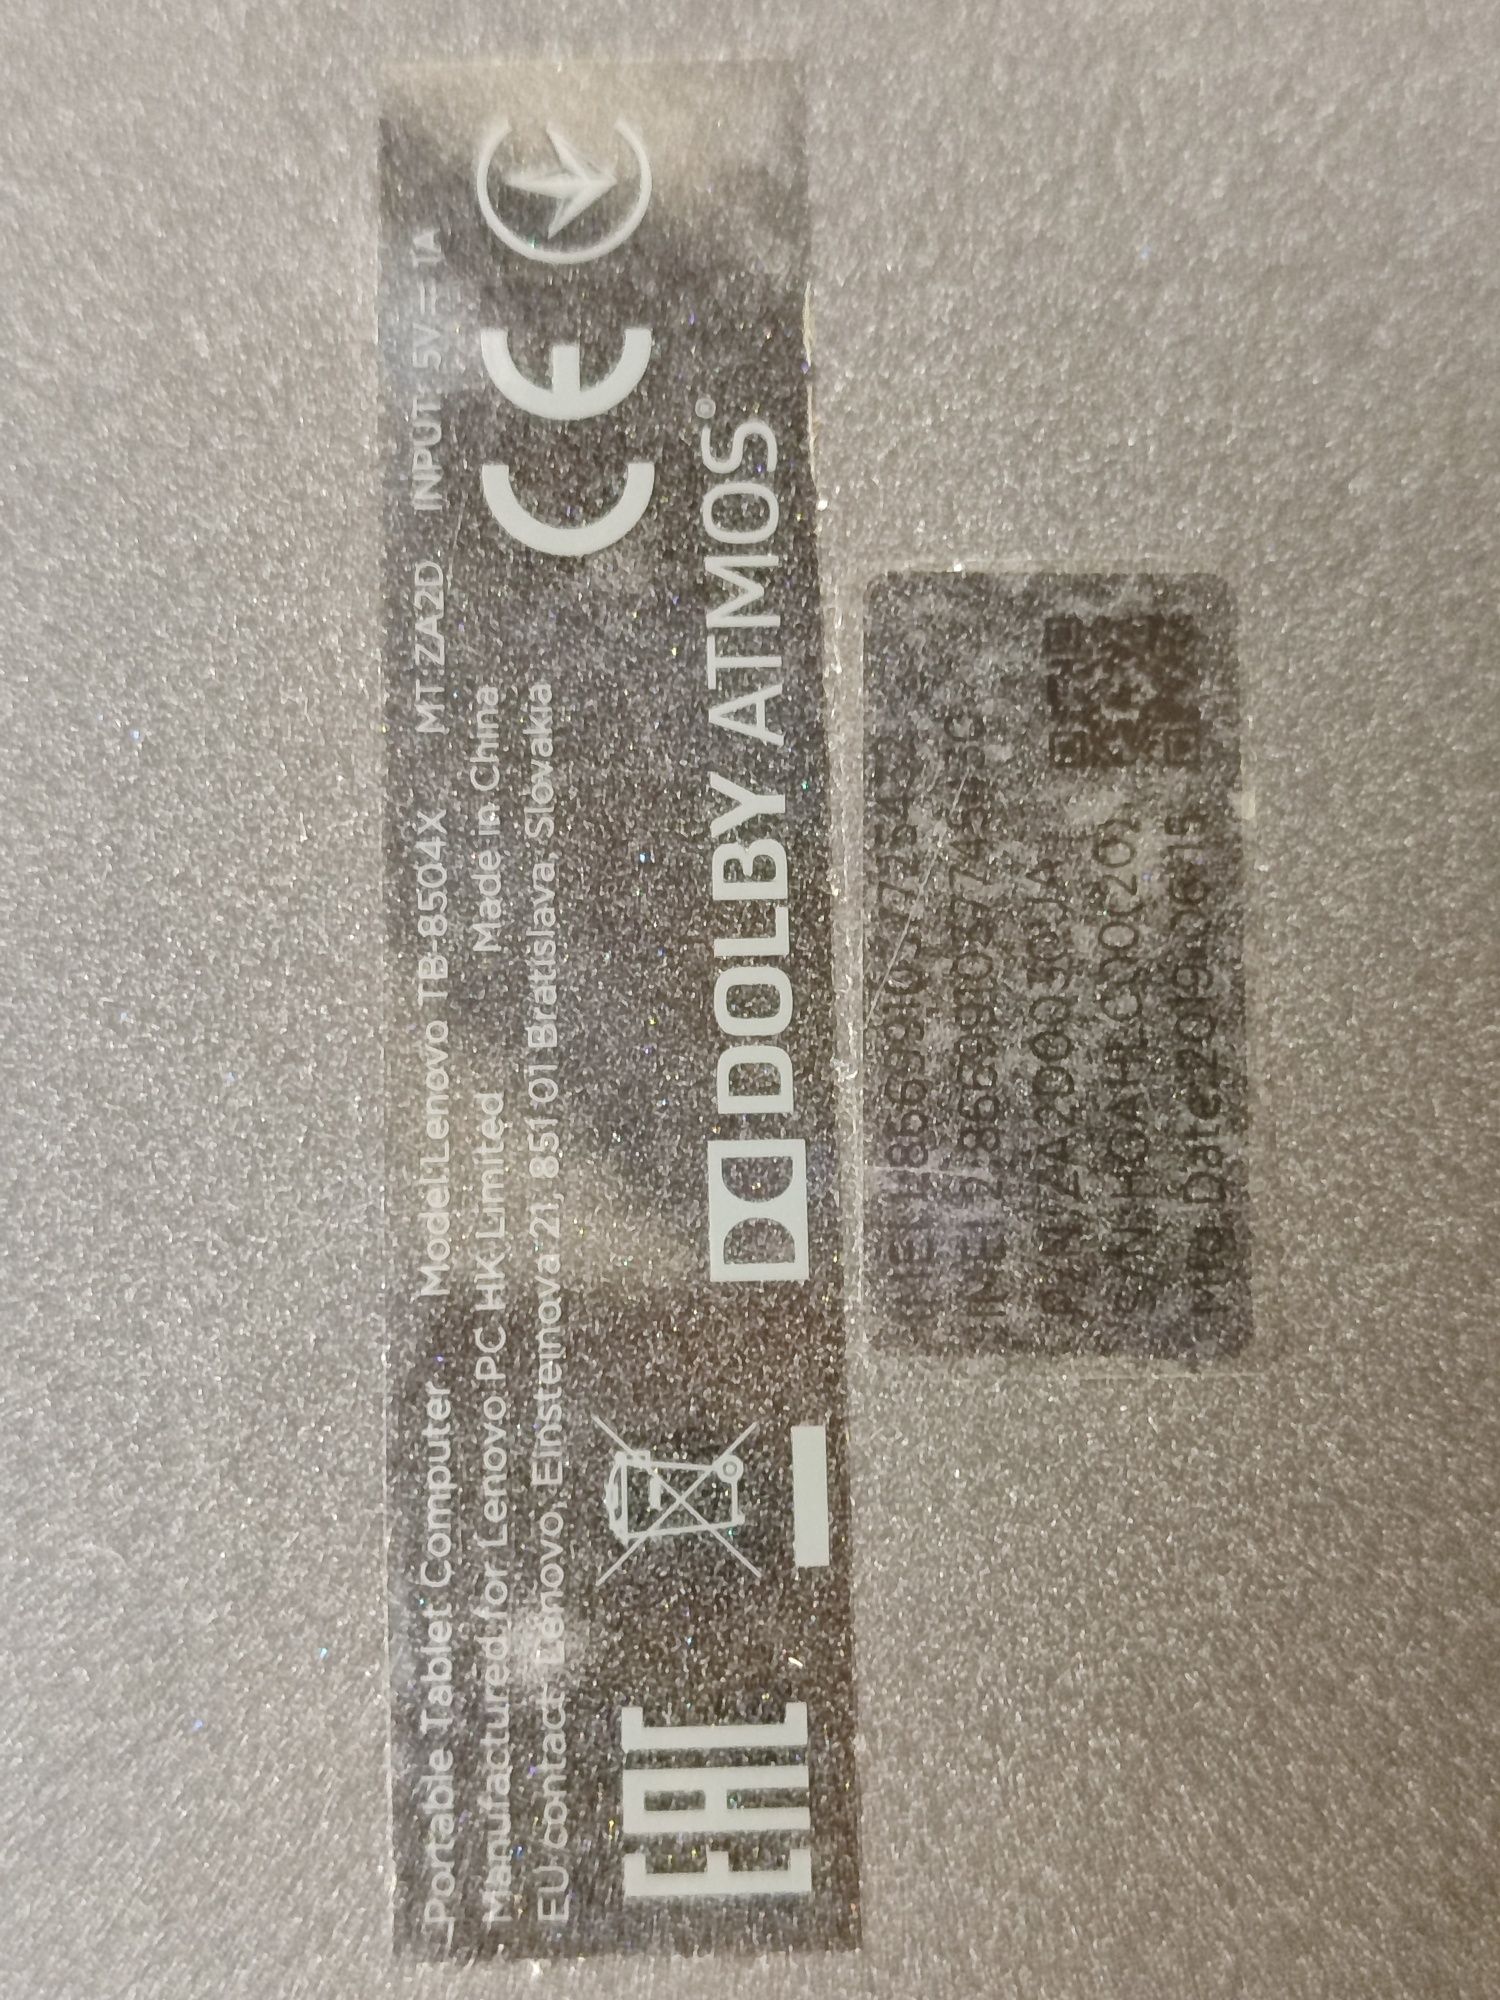 Планшет Lenovo б/у 2100грн